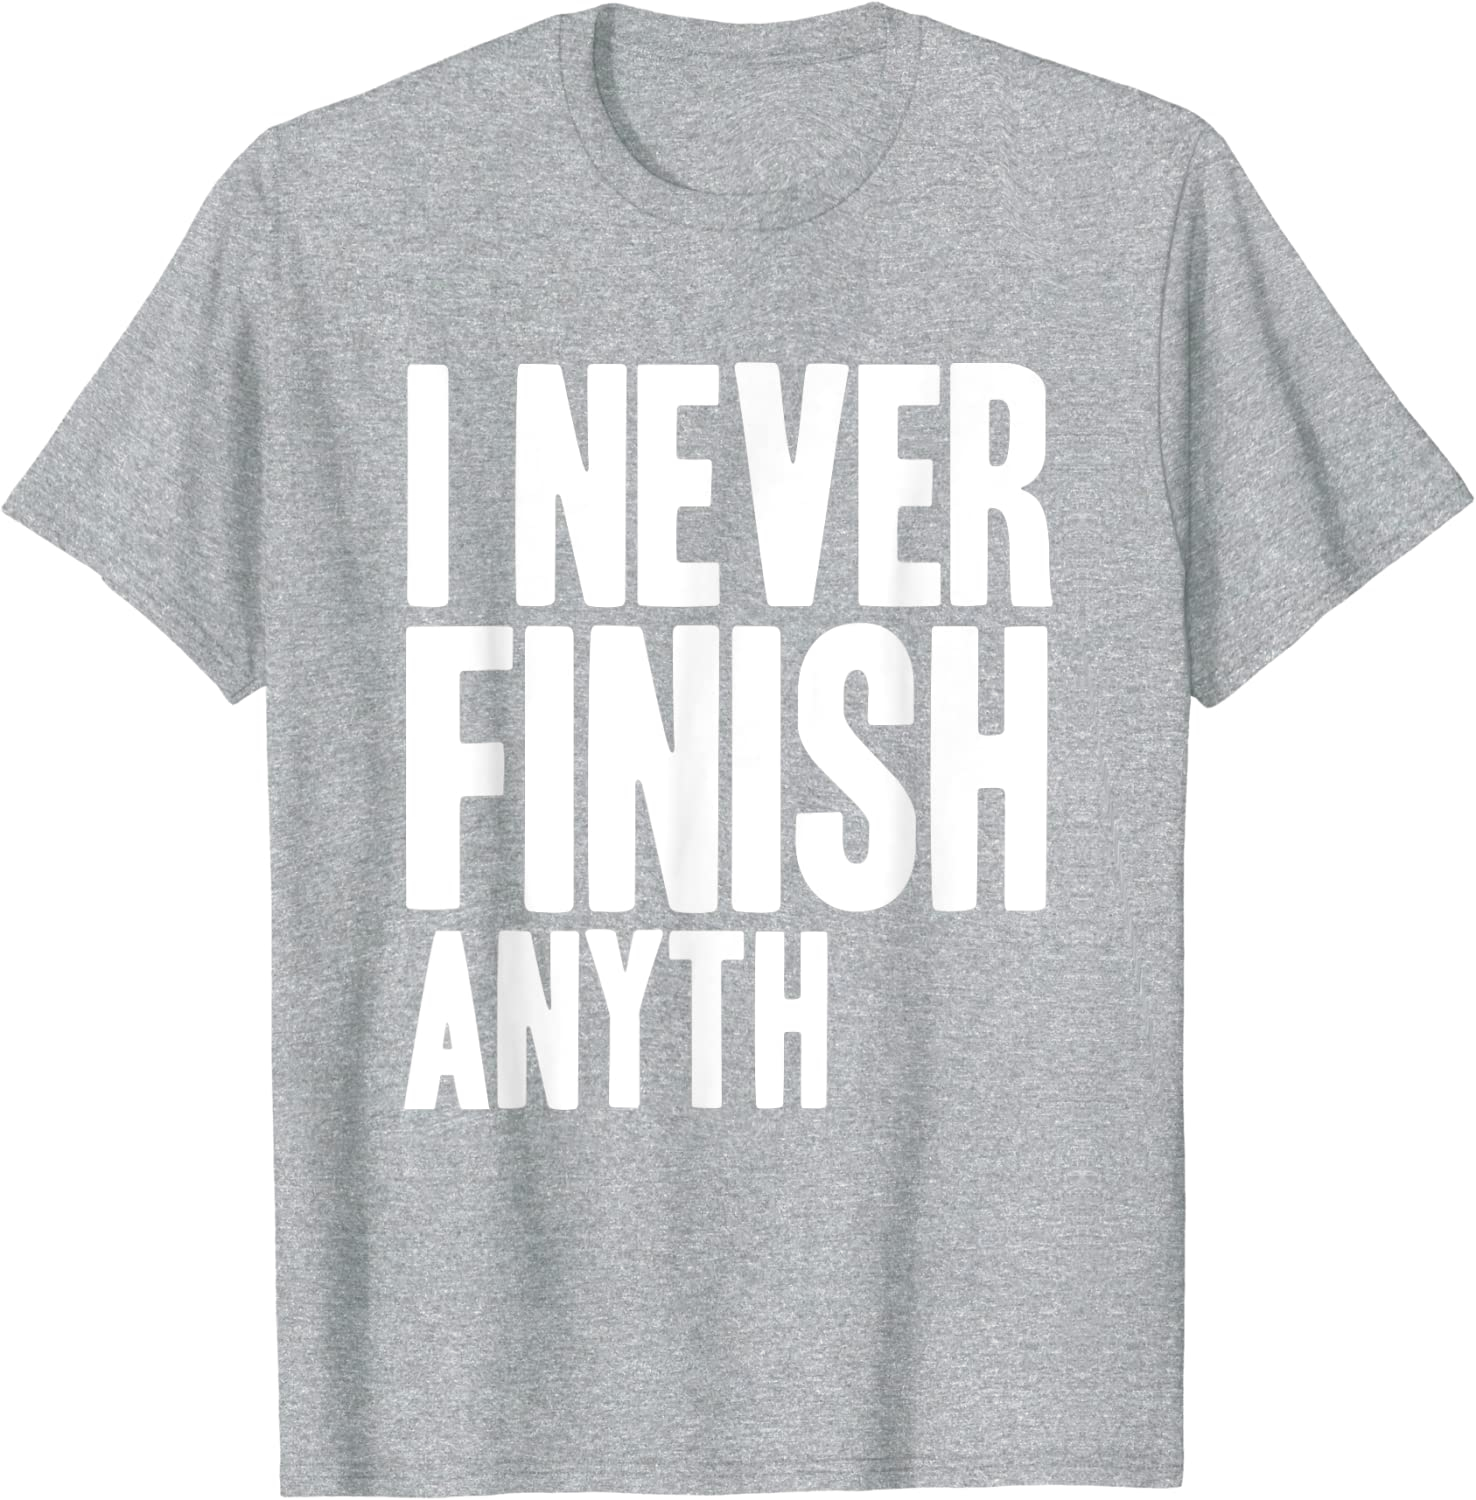 T-Shirt that says "I never finish anyth"